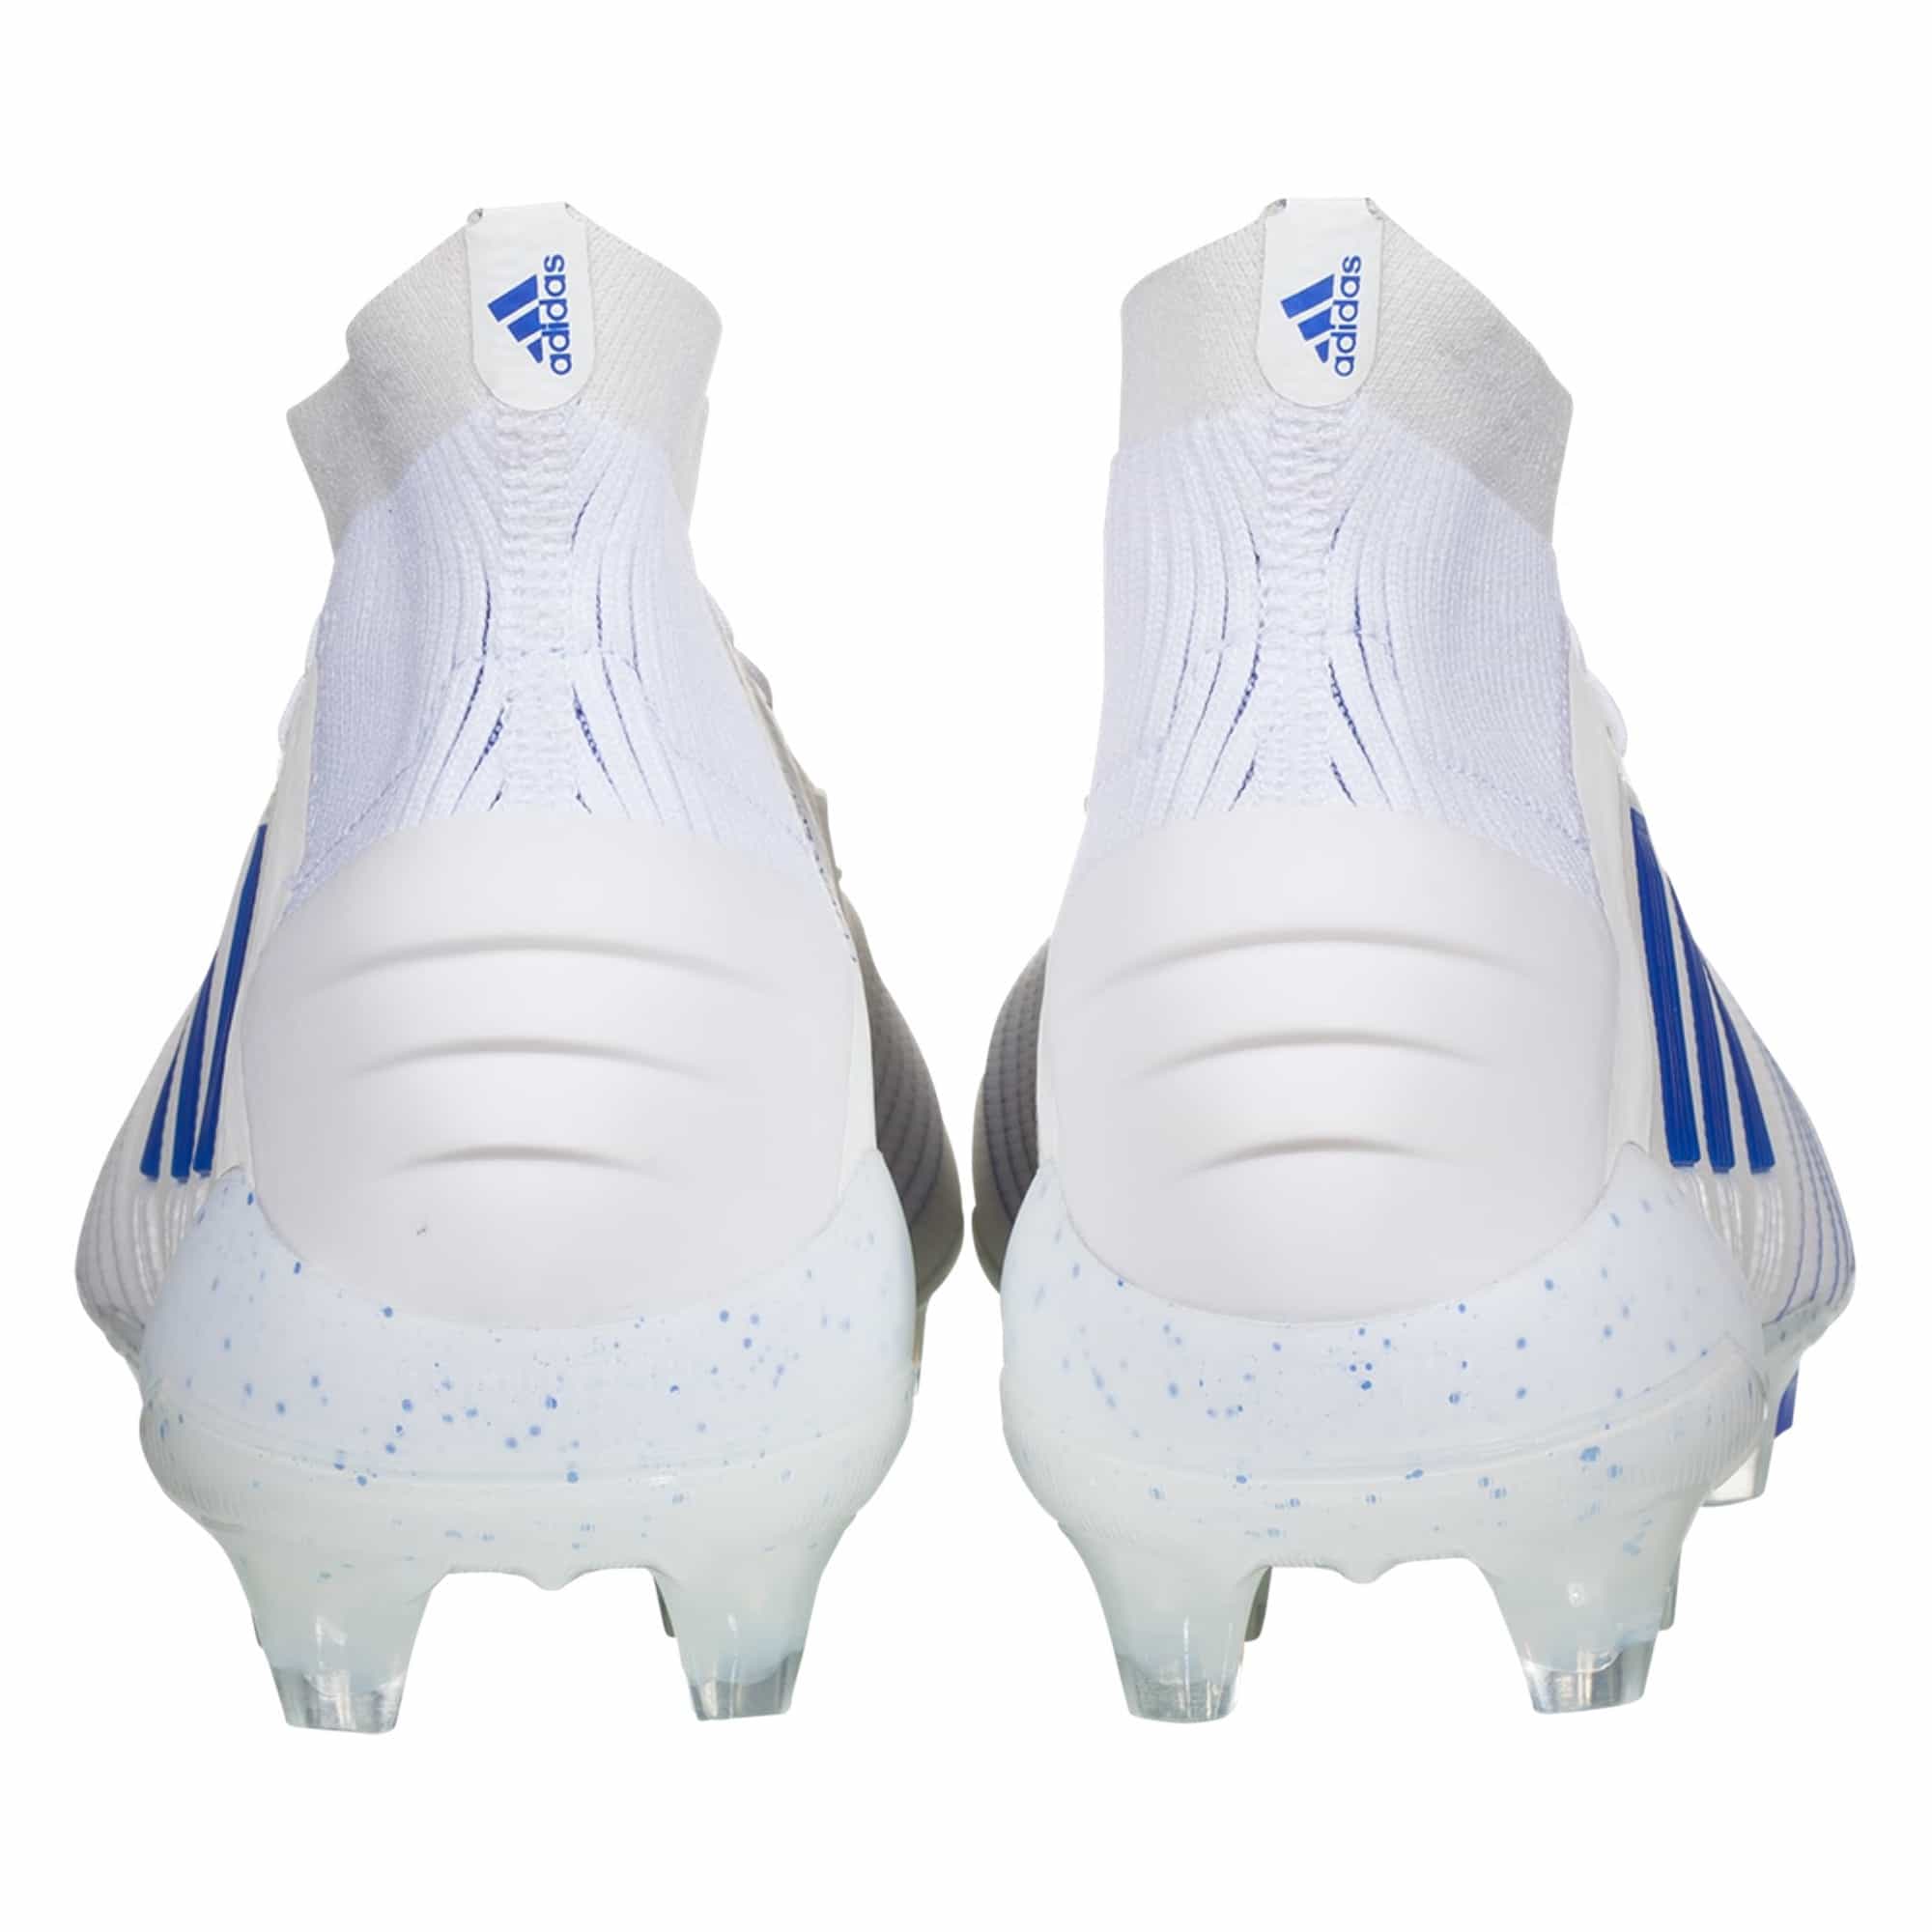 Adidas Predator 19 1 Fg Firm Ground Soccer Cleat White Blue